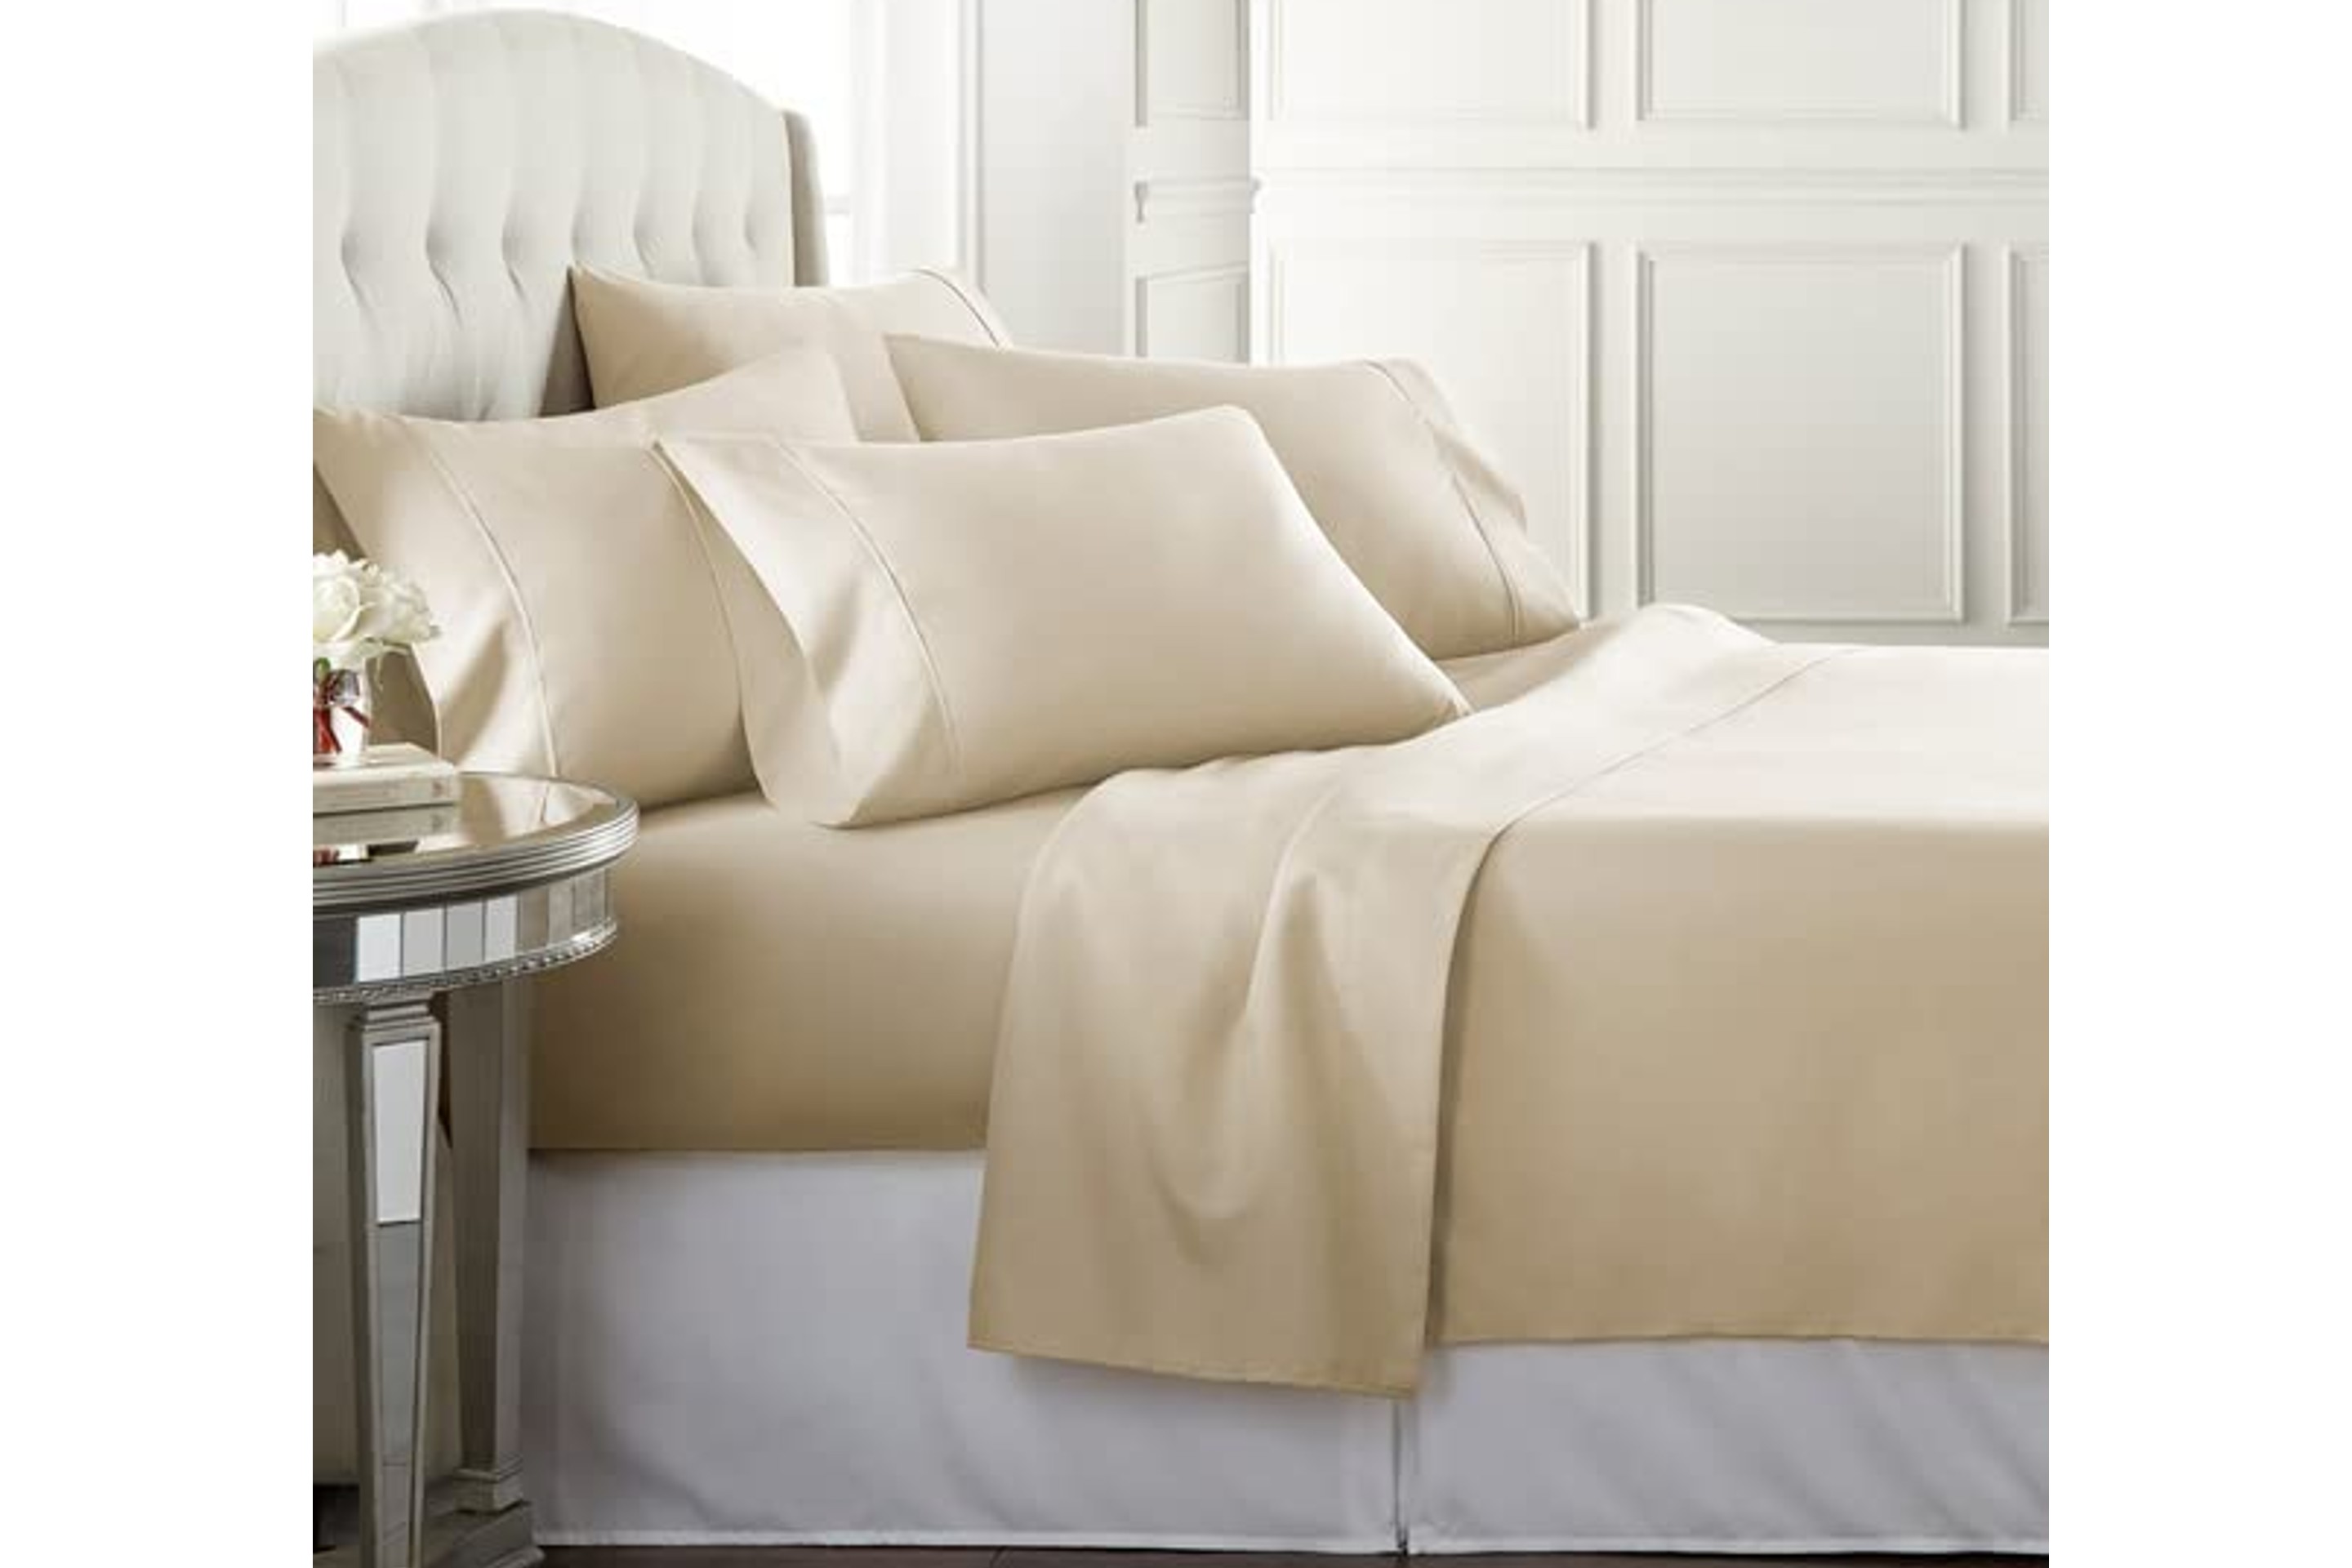 Danjor Linens Cream Queen Size Bedding Set